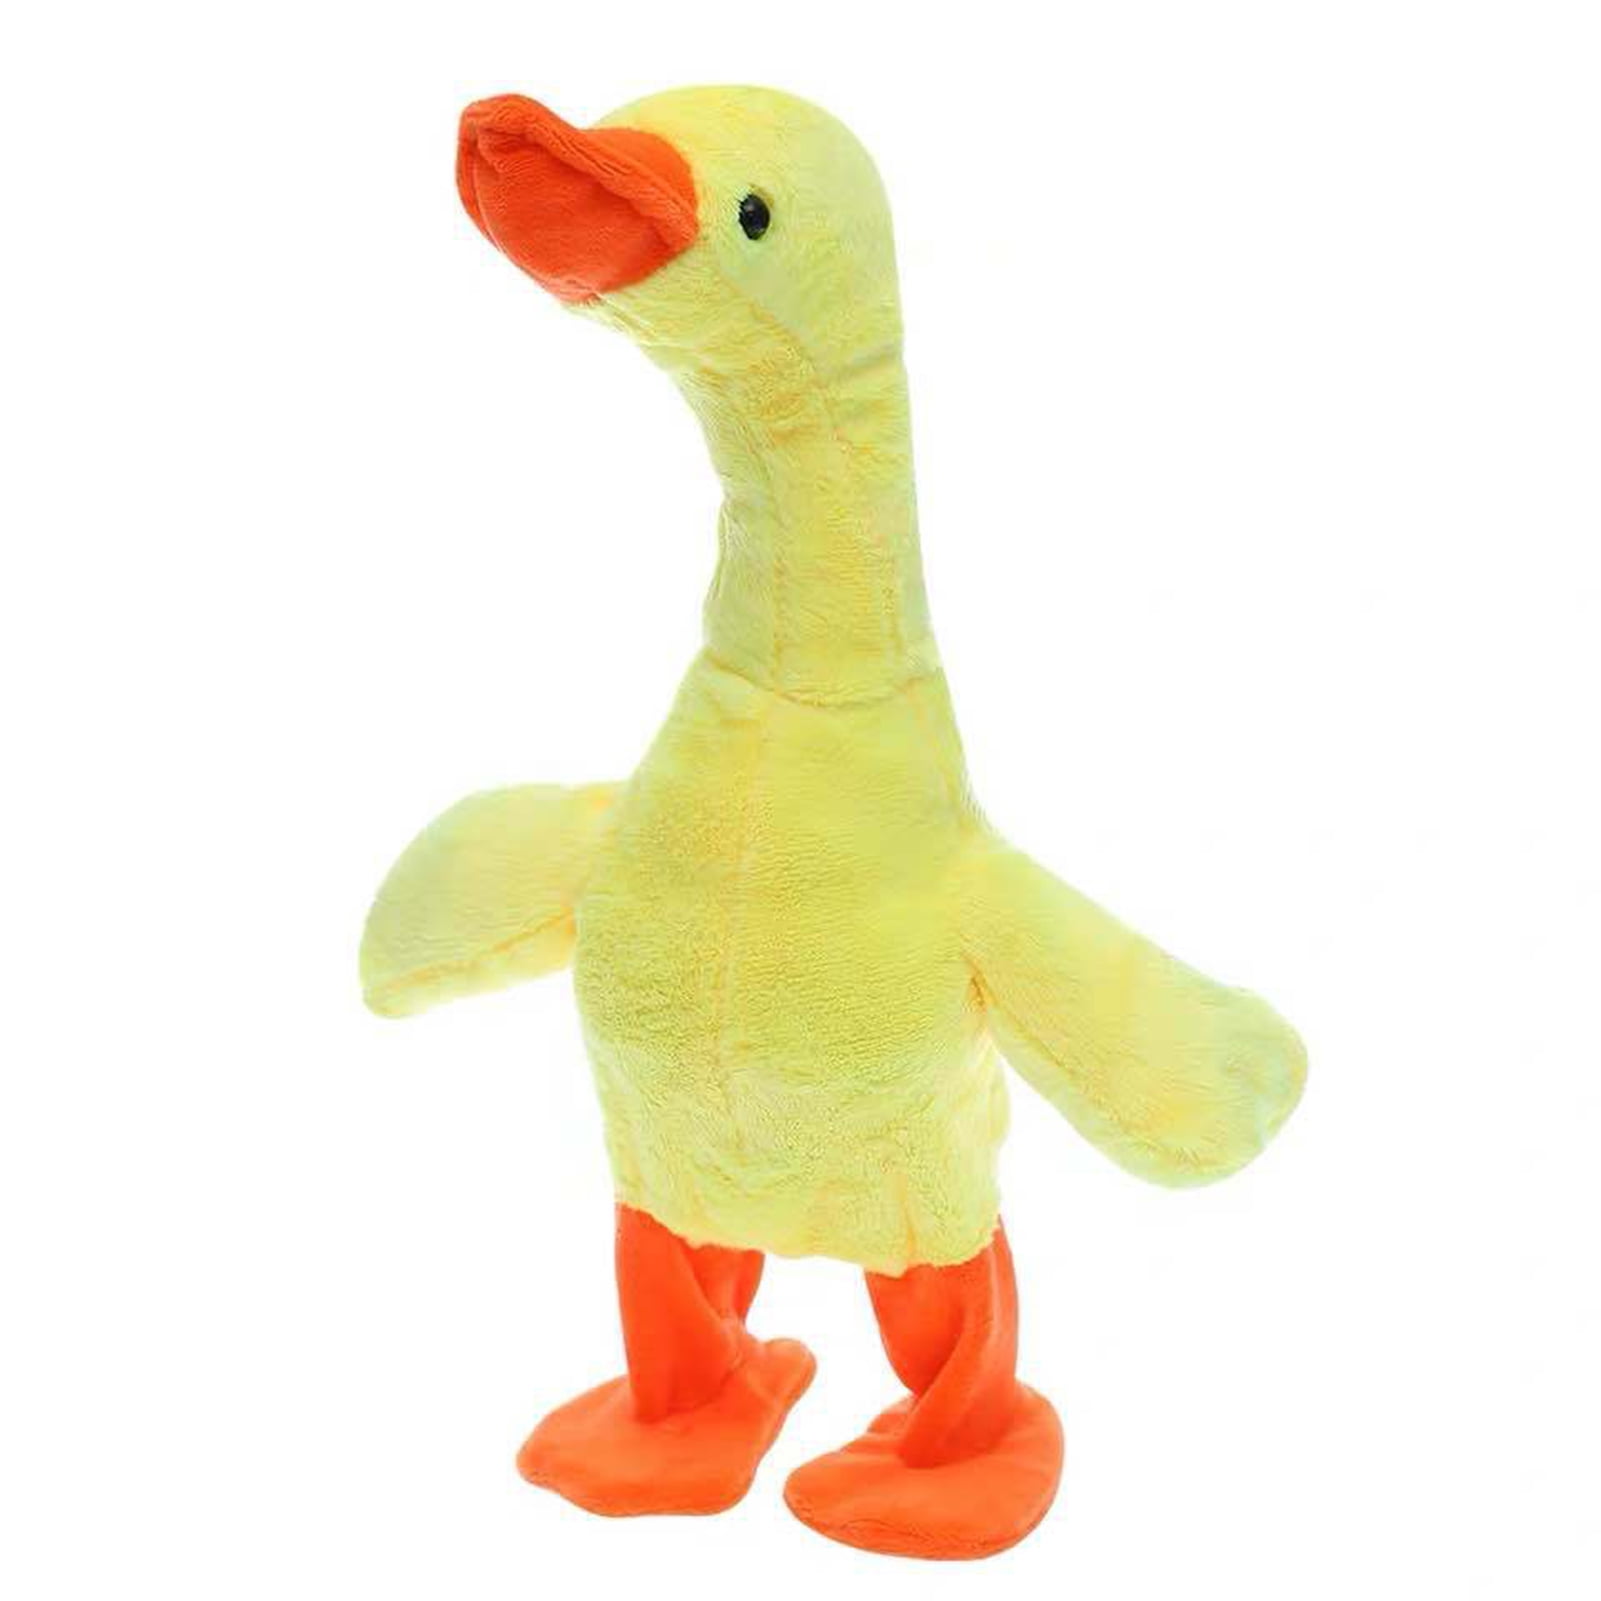 2 x Small Walking Plush Duck Toy Battery-Powered Stuffed Animal w/Sound 